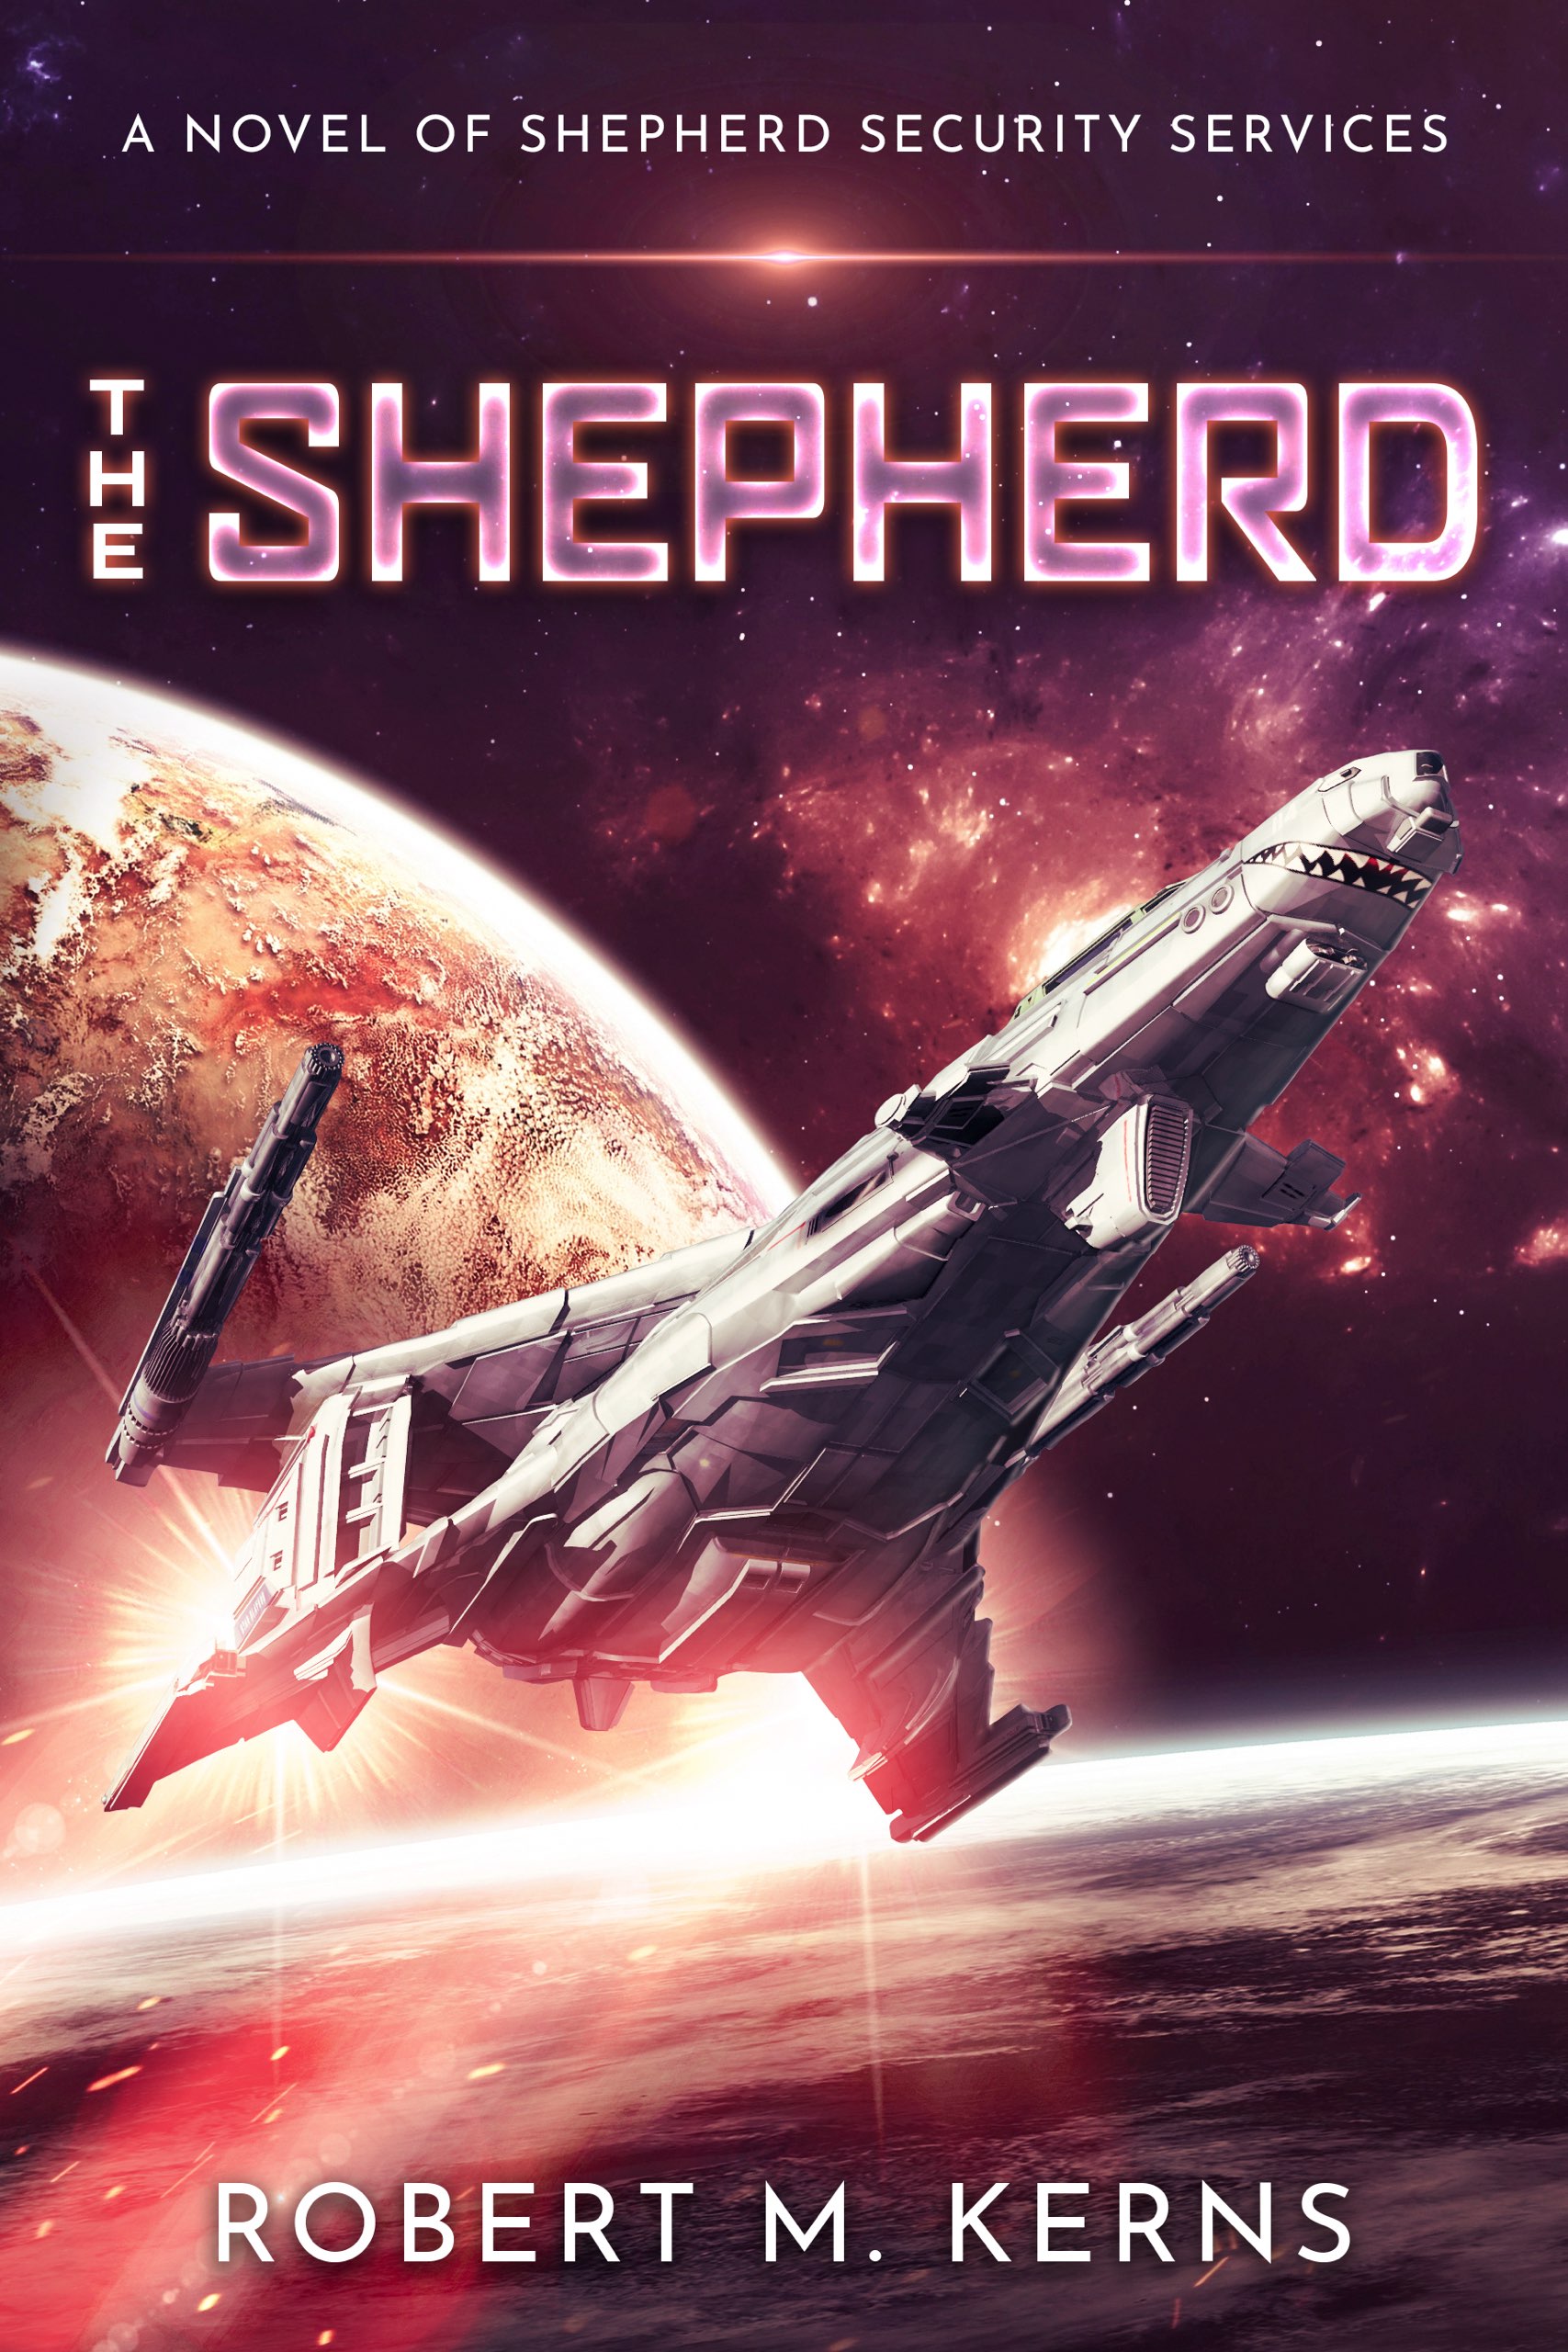 The Shepherd by Robert M. Kerns